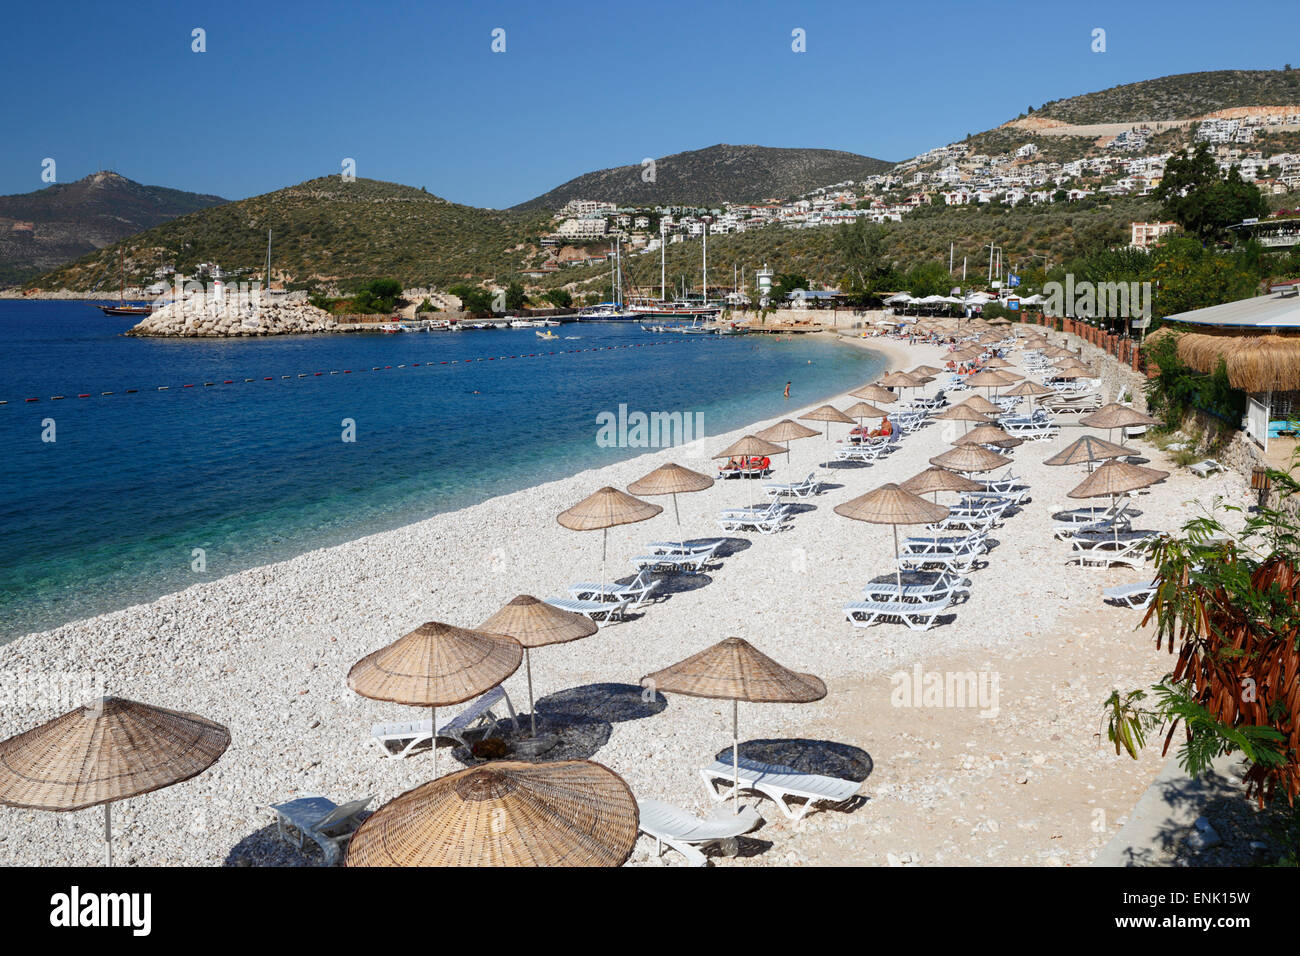 View over beach, Kalkan, Lycia, Antalya Province, Mediterranean Coast, Southwest Turkey, Anatolia, Turkey, Asia Minor, Eurasia Stock Photo